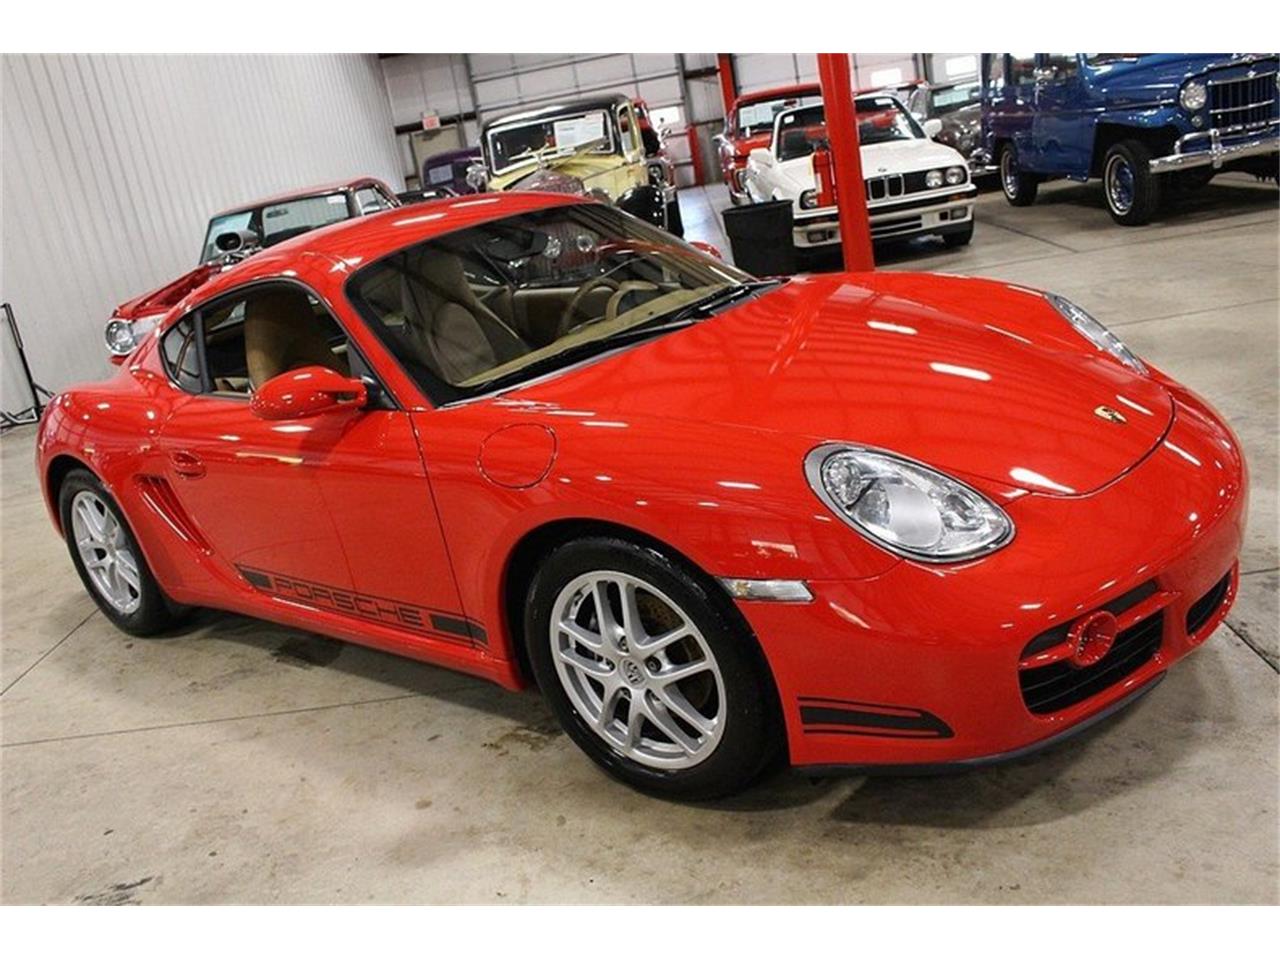 2007 Porsche Cayman for Sale | ClassicCars.com | CC-996506